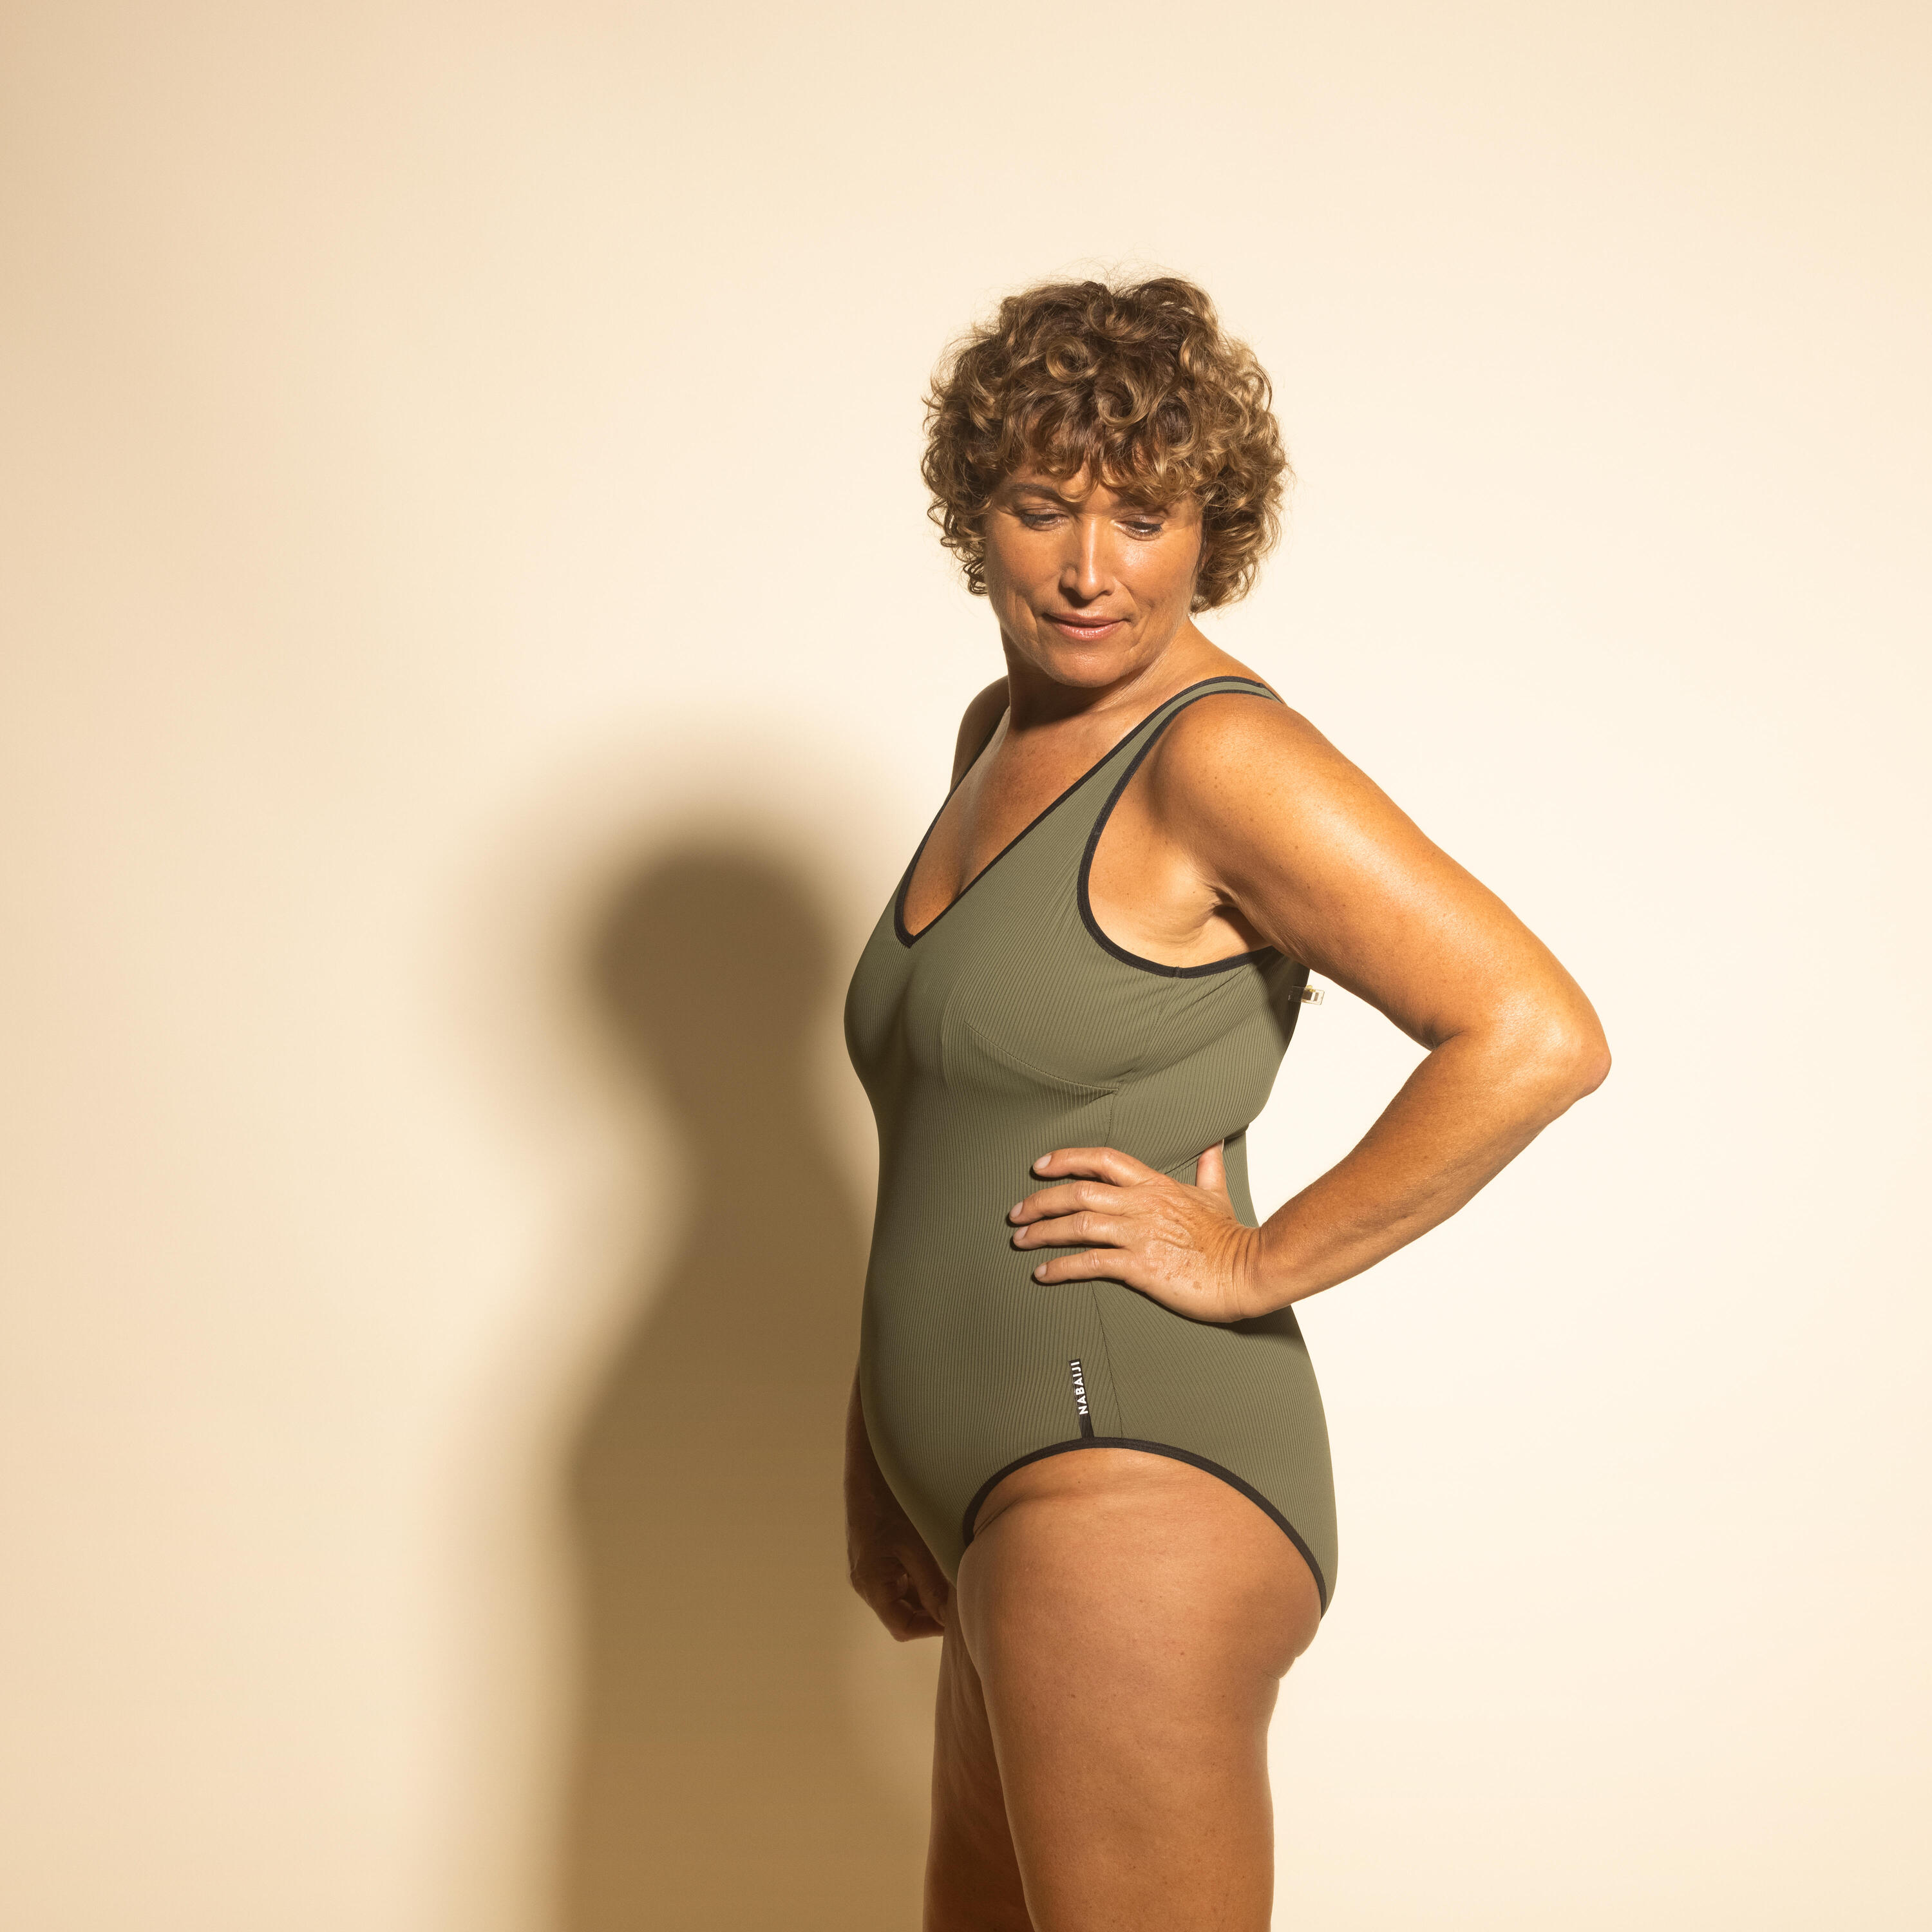 Women's Aquafit 1-piece Swimsuit Ines - Khaki 5/9